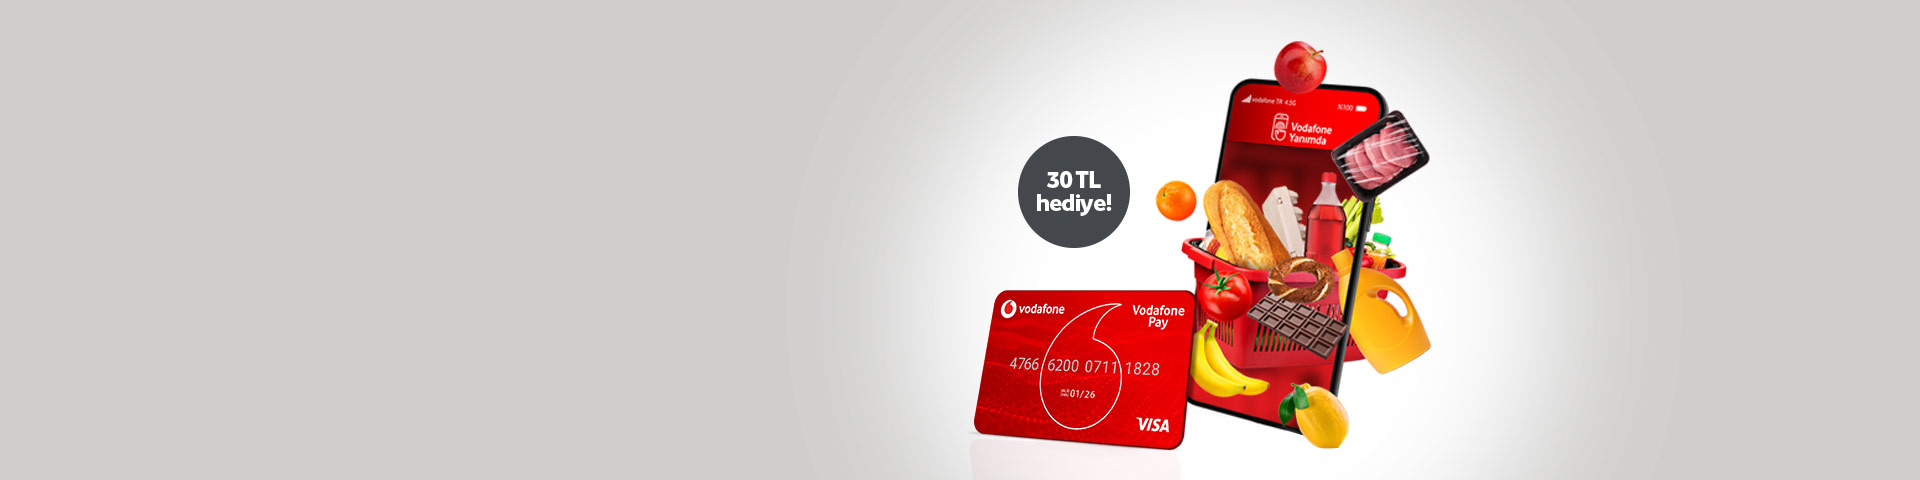 Vodafone Pay Masterpass